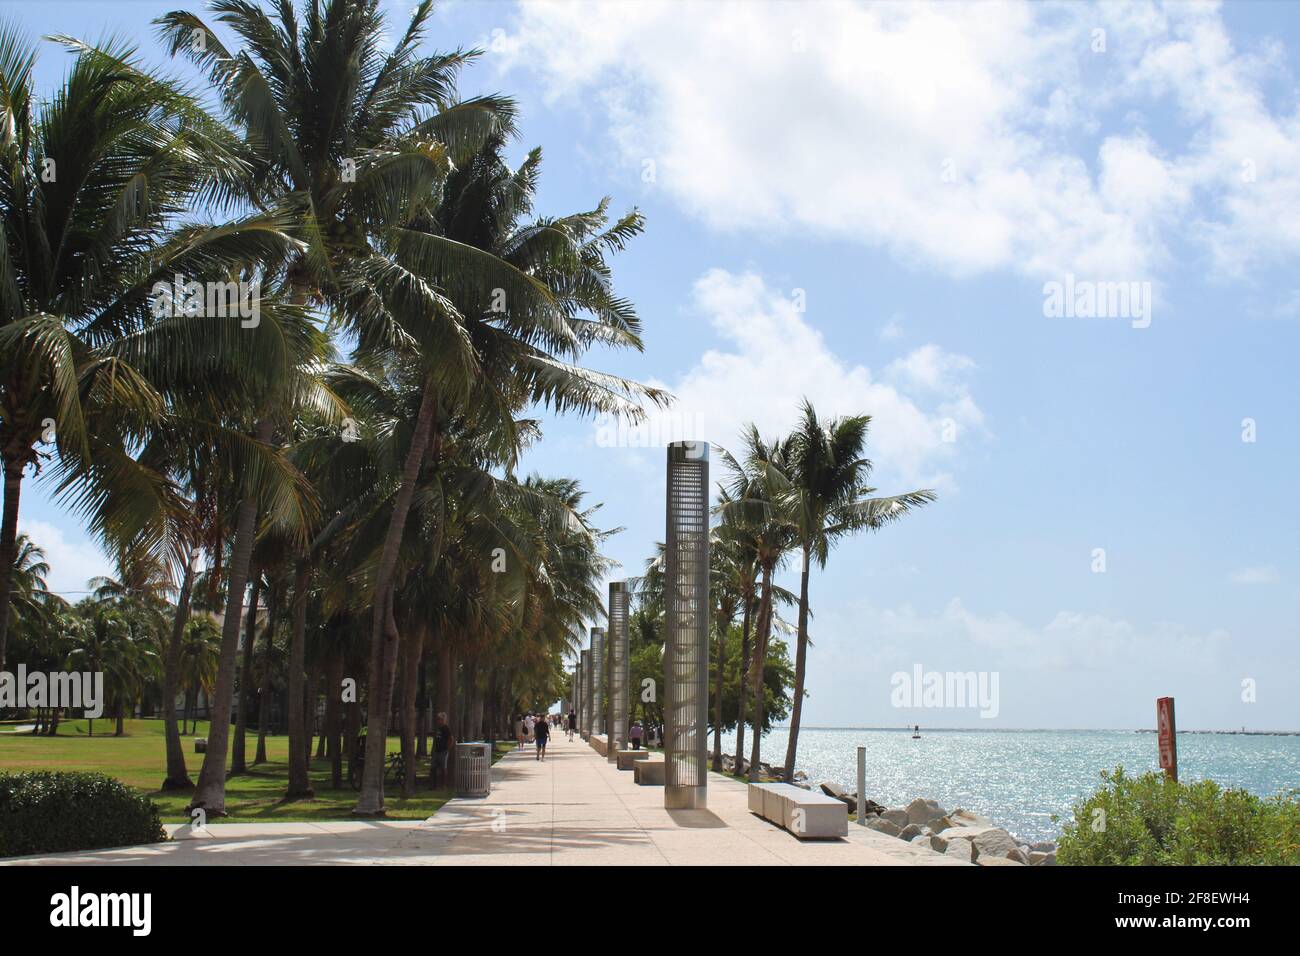 South Pointe beach boardwalk promenade area in Miami Beach, Florida. Copyspace Stock Photo